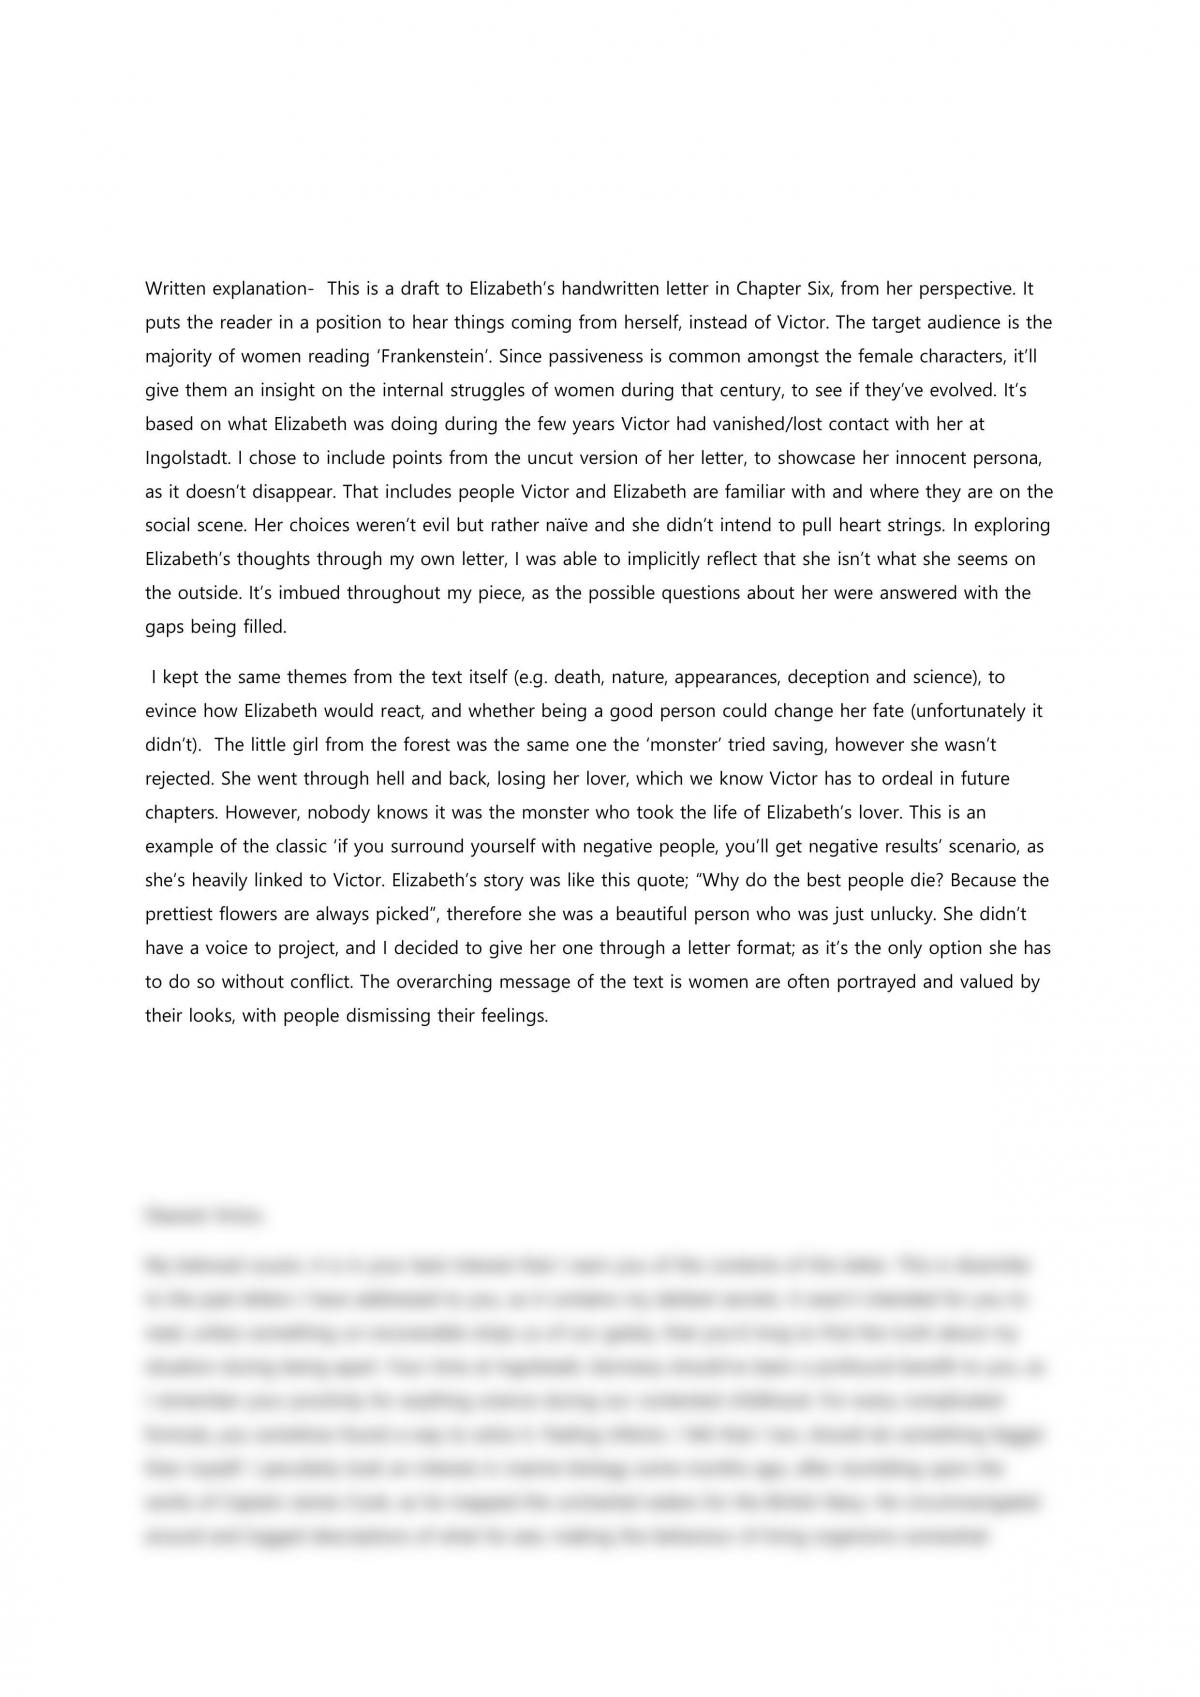 frankenstein essay topics pdf